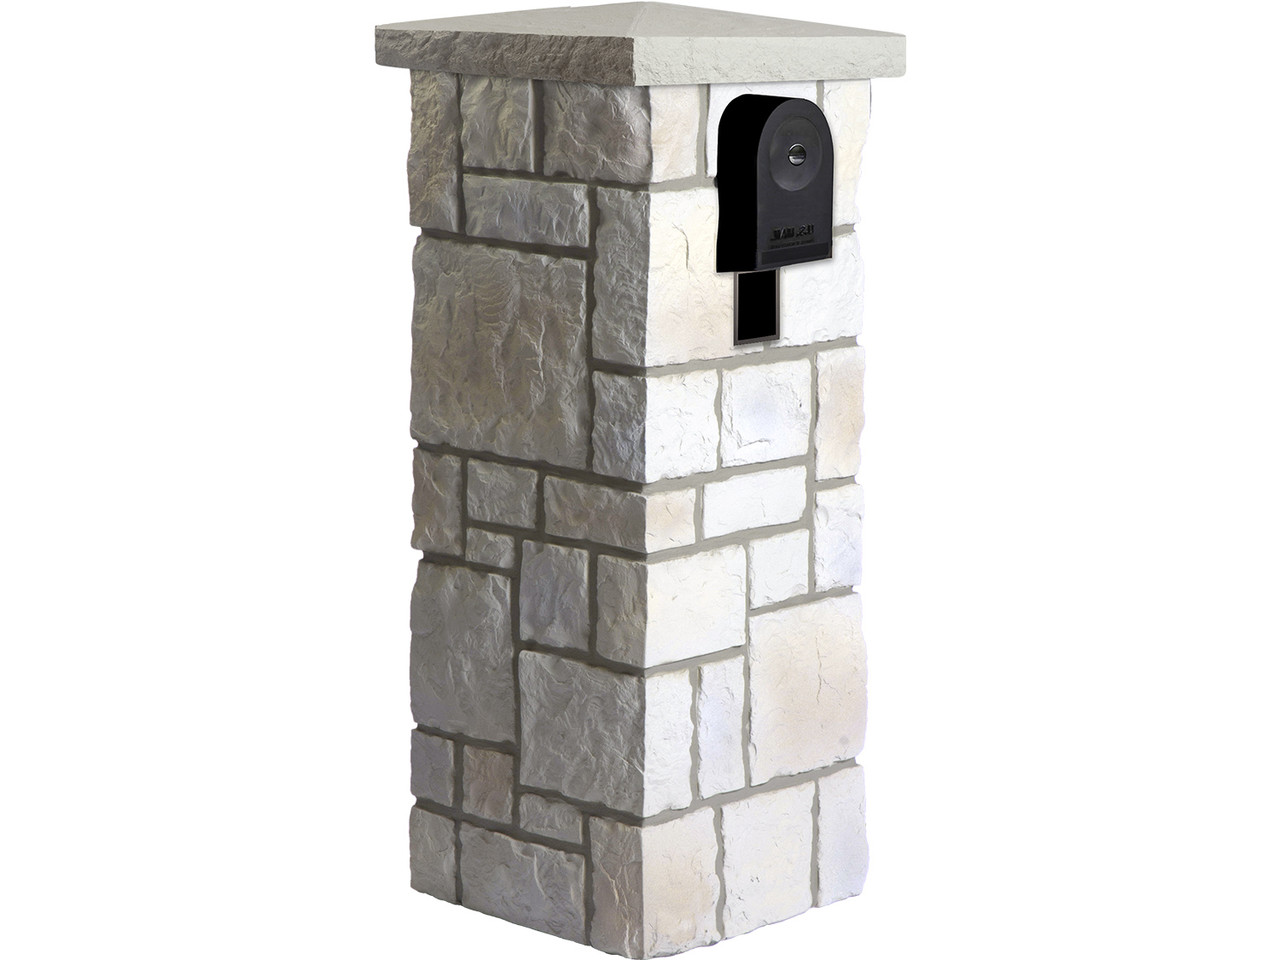 Impressive faux brick mailbox Carlton Castle Rock Mailbox Kit Barron Designs